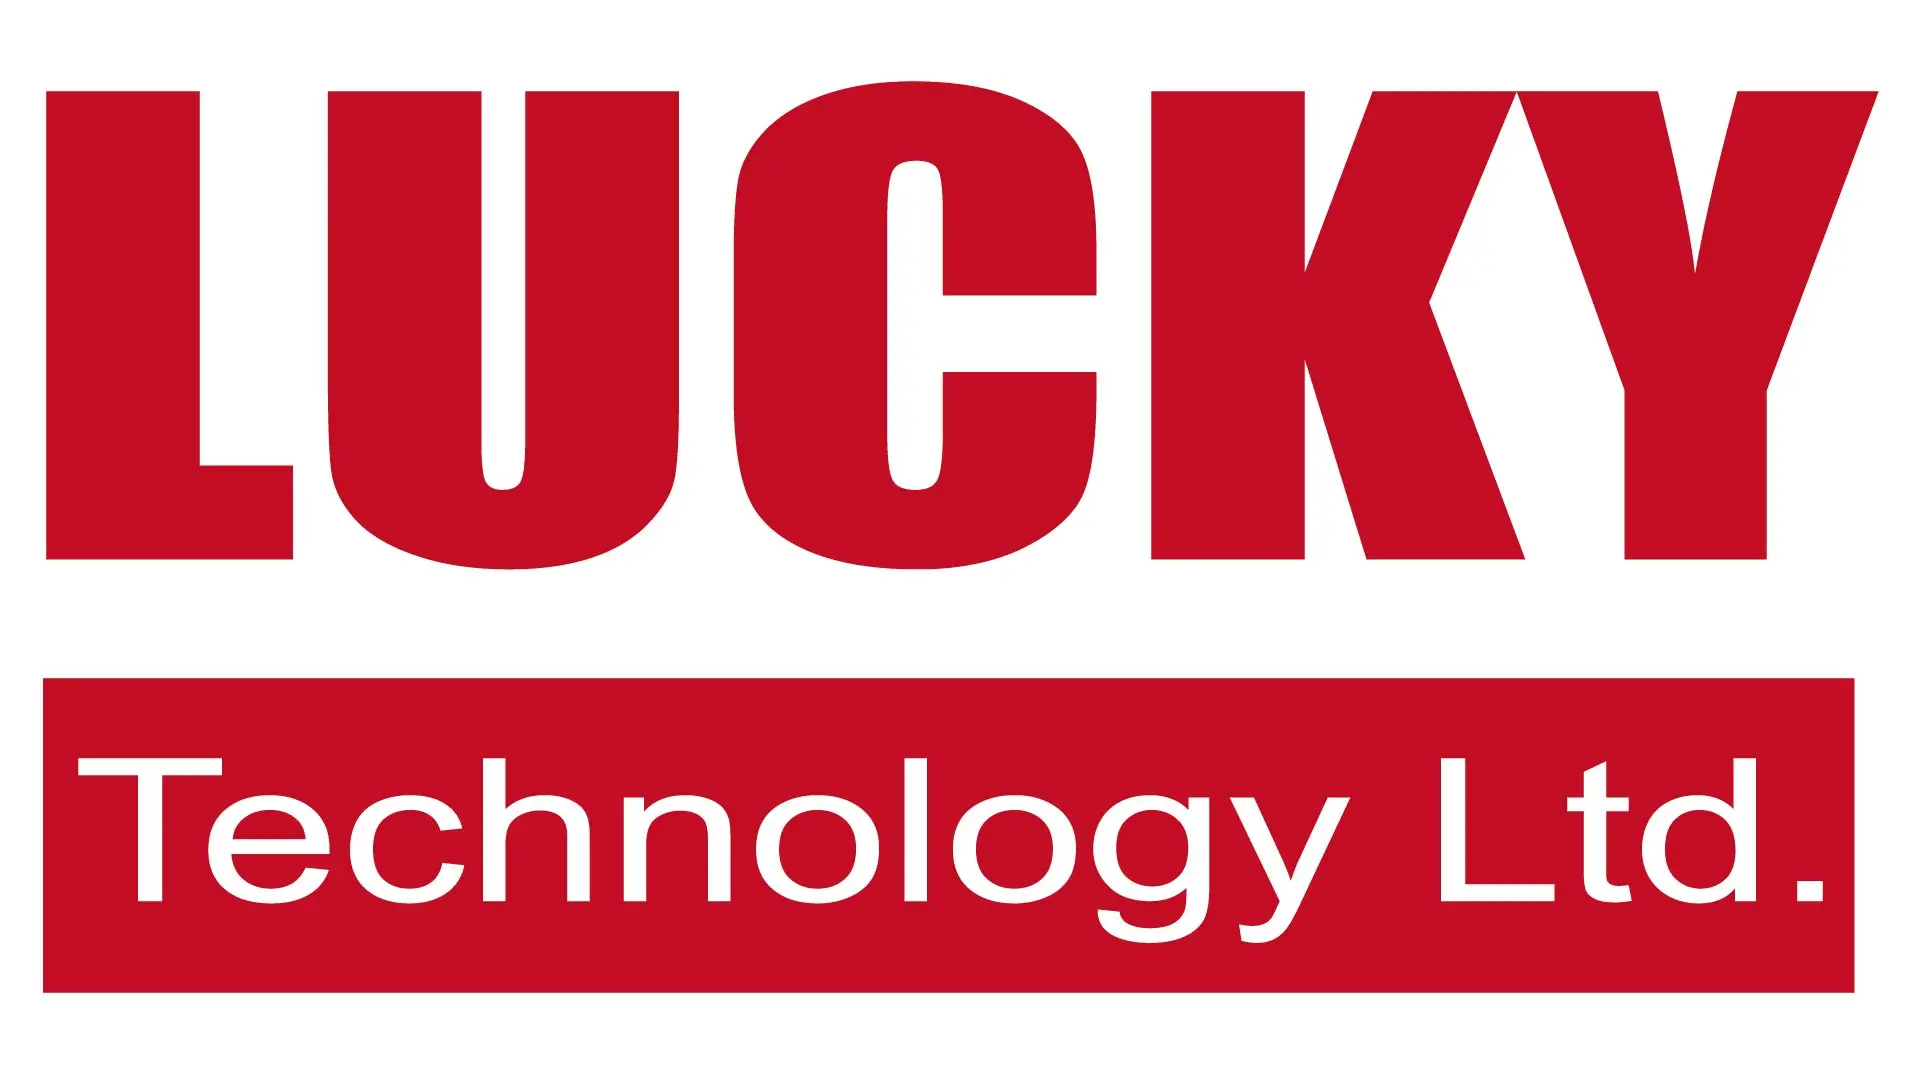 Tech limited. Lucky Technology Limited. Lucky Tech.